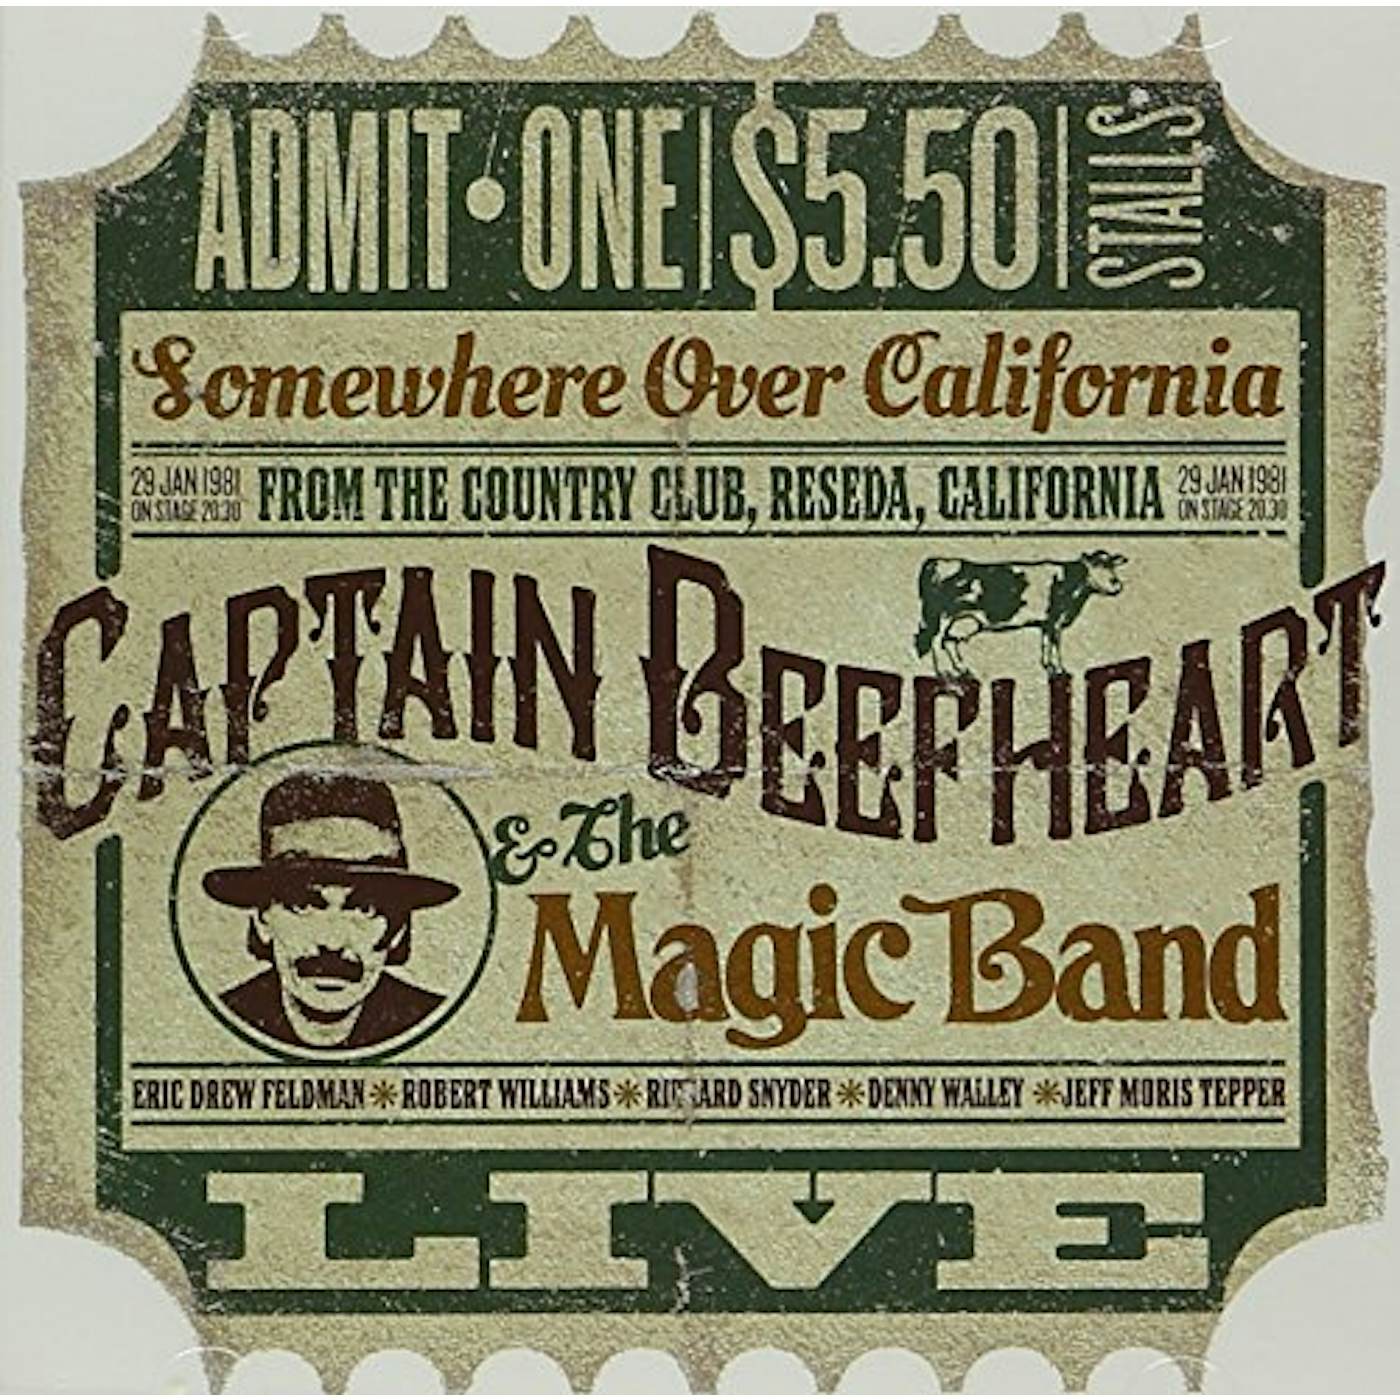 Captain Beefheart & His Magic Band LIVE AT THE COUNTRY CLUB RESEDA CALIFORNIA 1981 CD